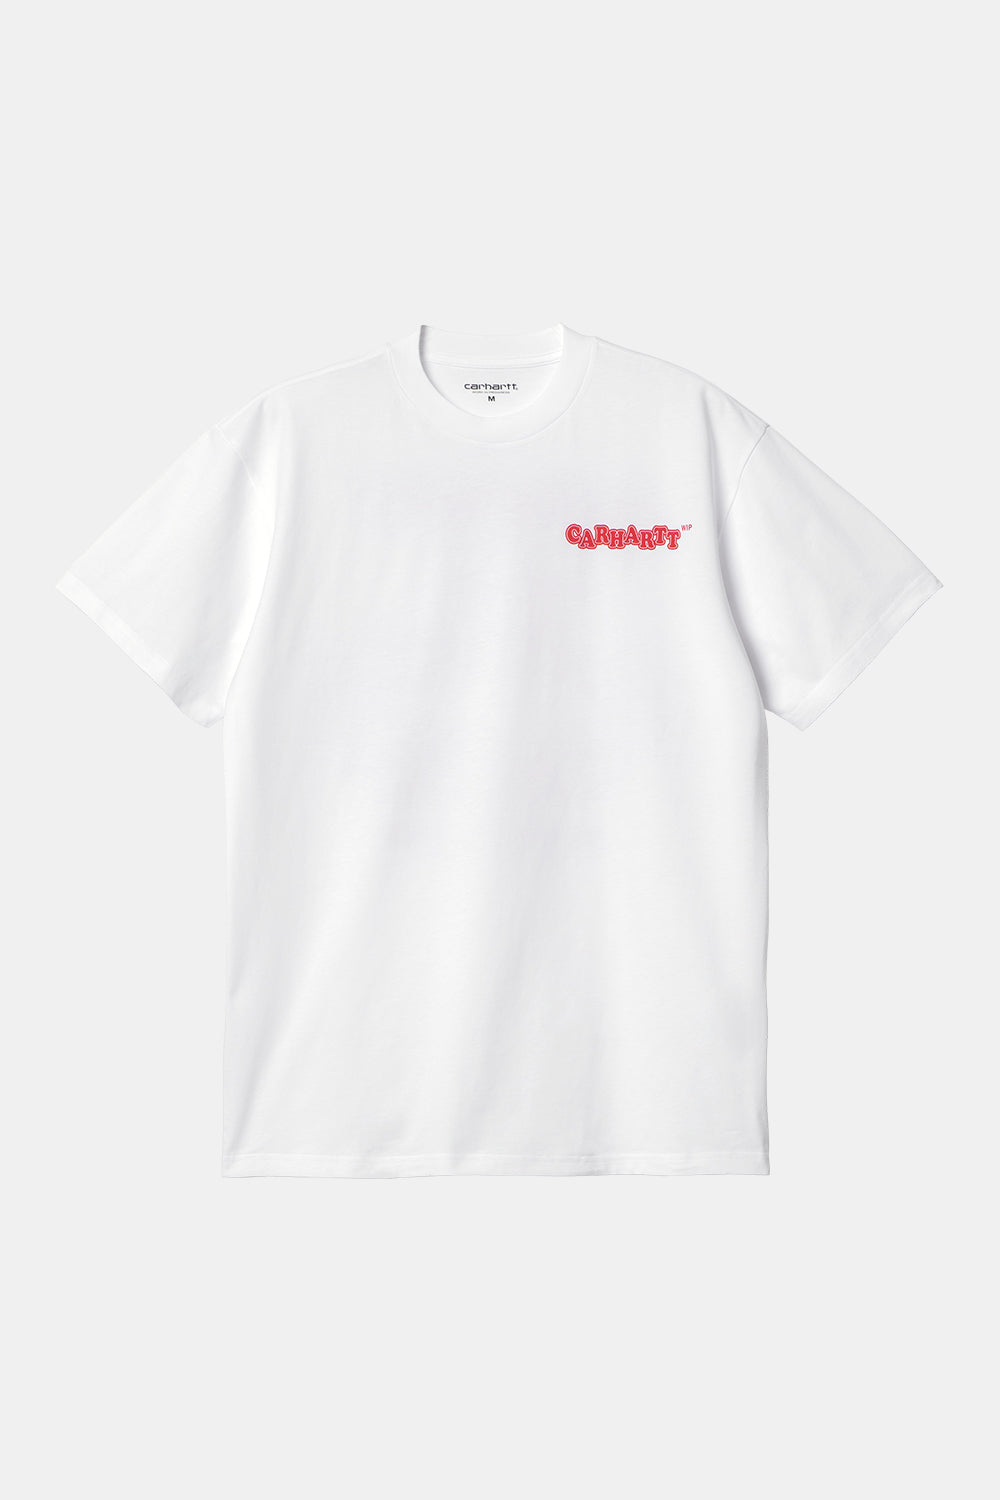 Carhartt WIP Short Sleeve Fast Food T-Shirt (White)
